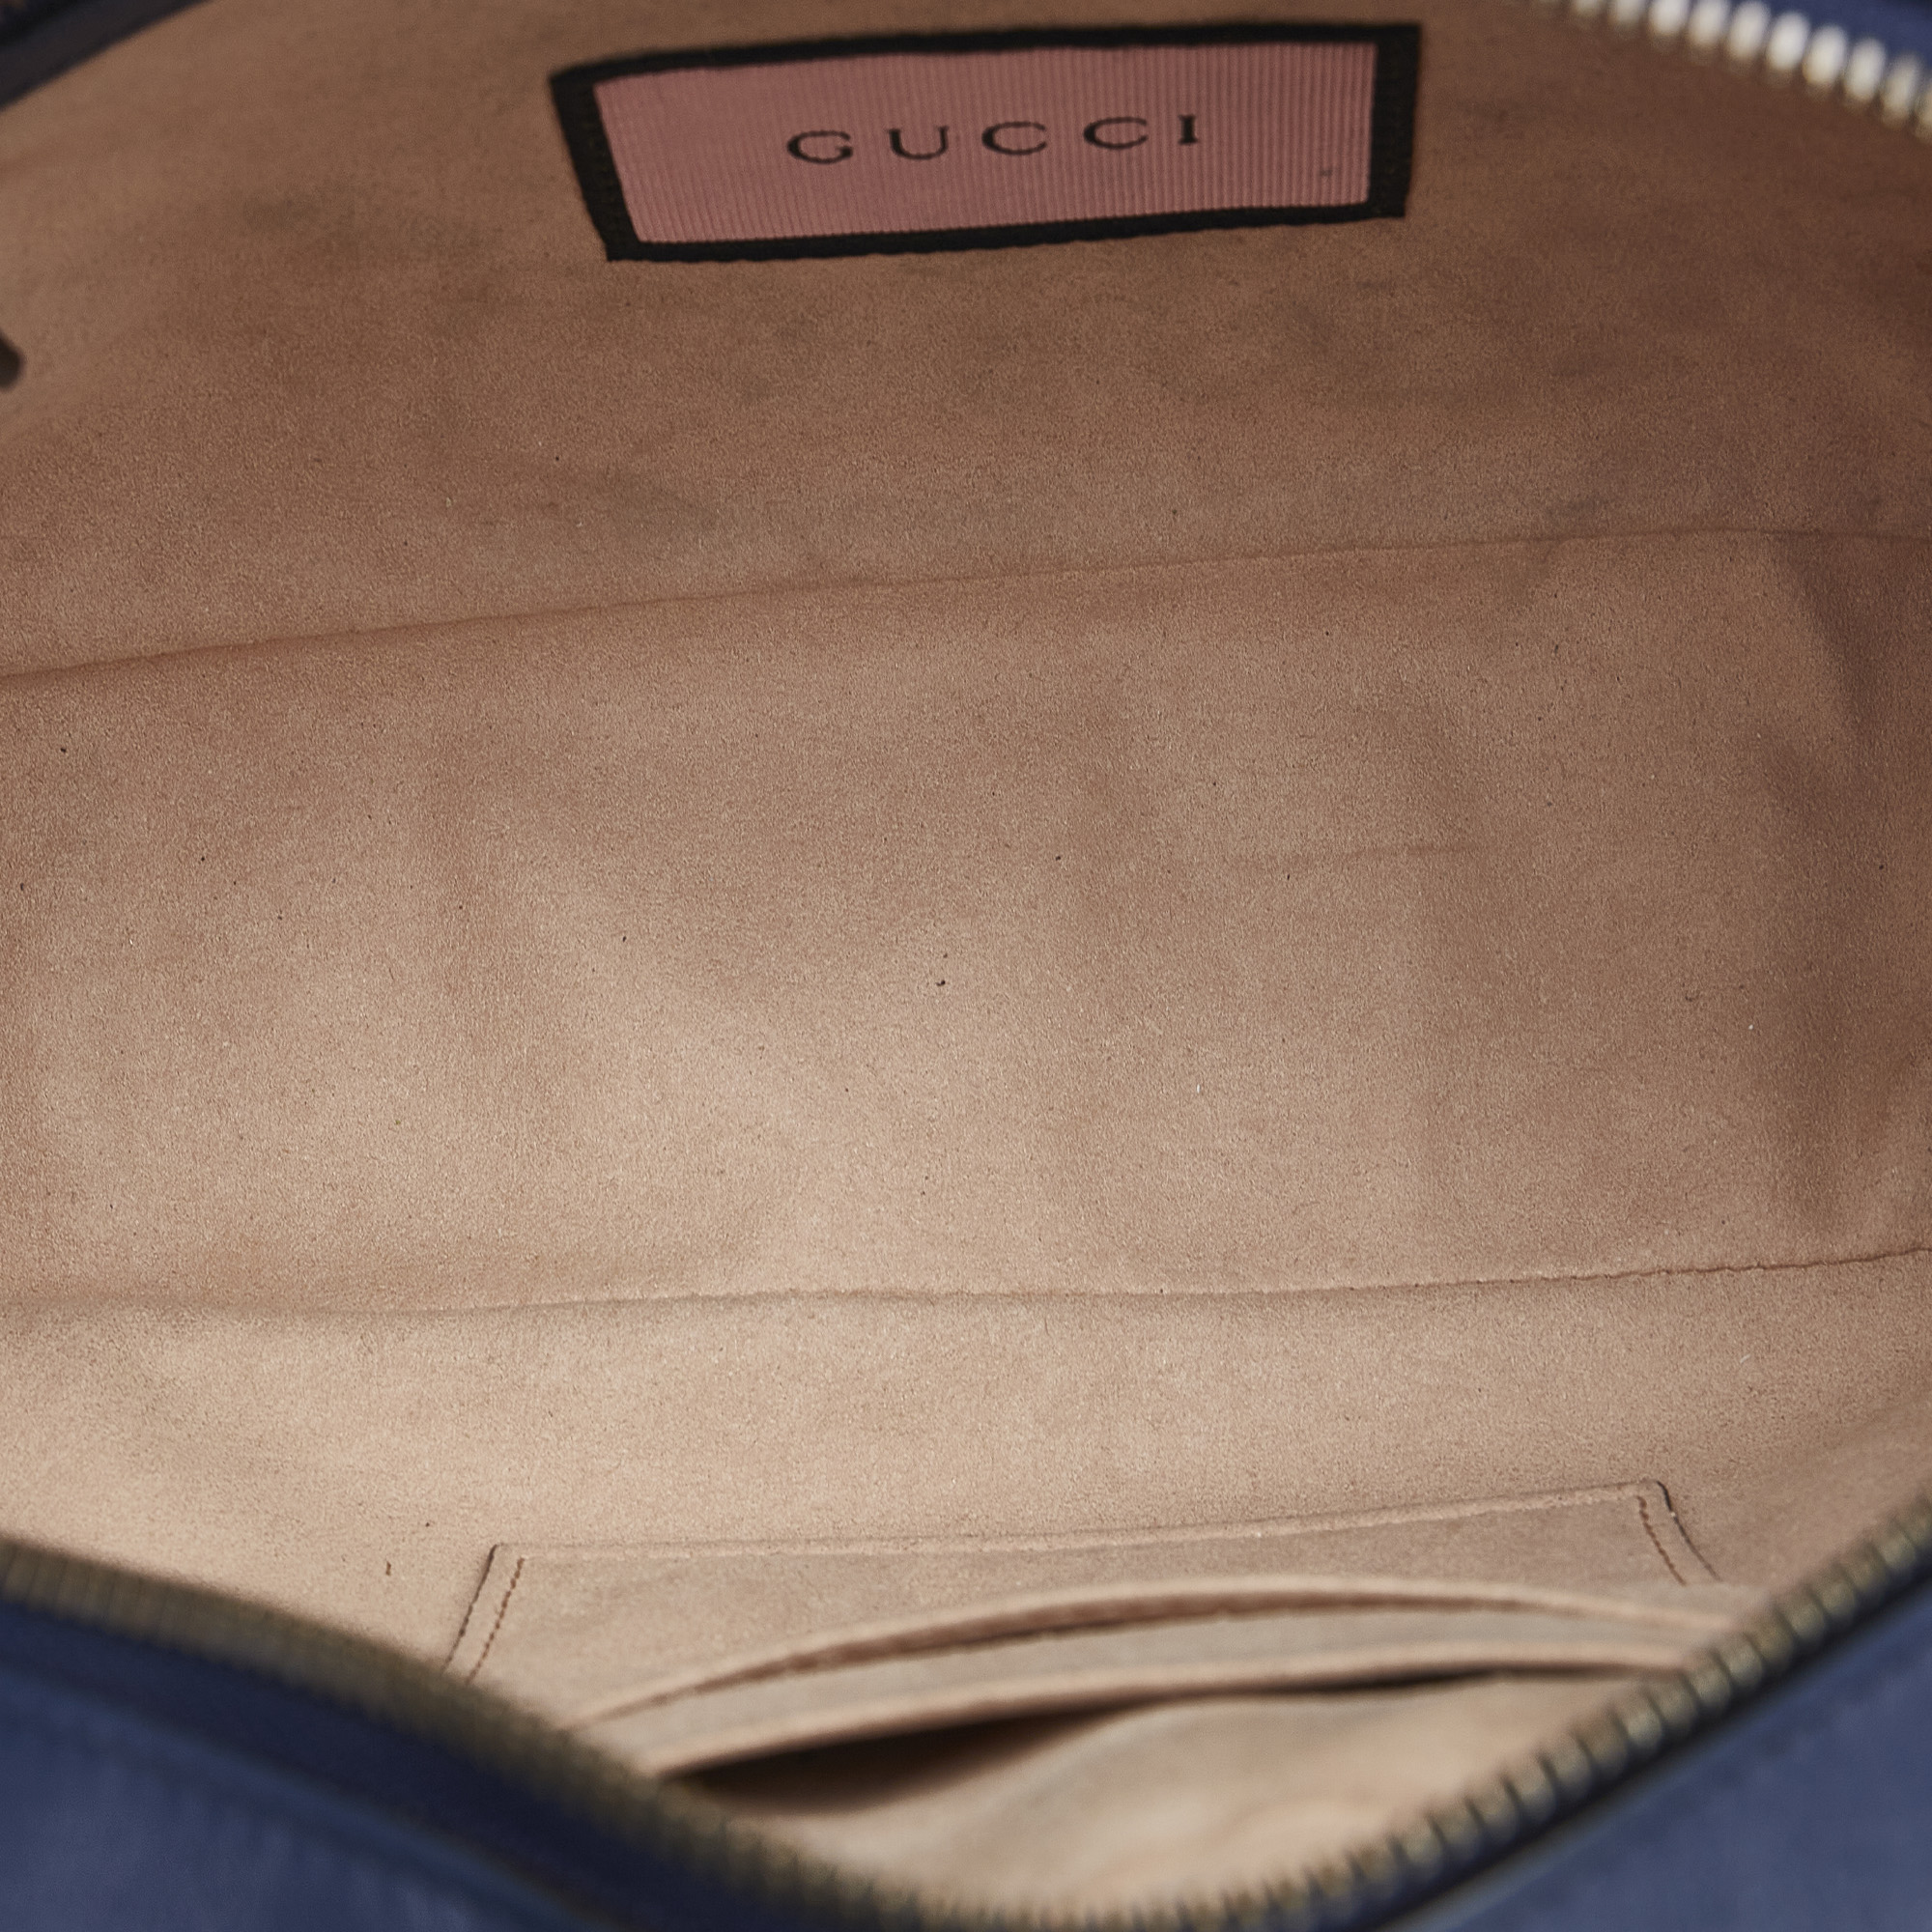 Gucci Blue GG Marmont Ghost Crossbody Bag